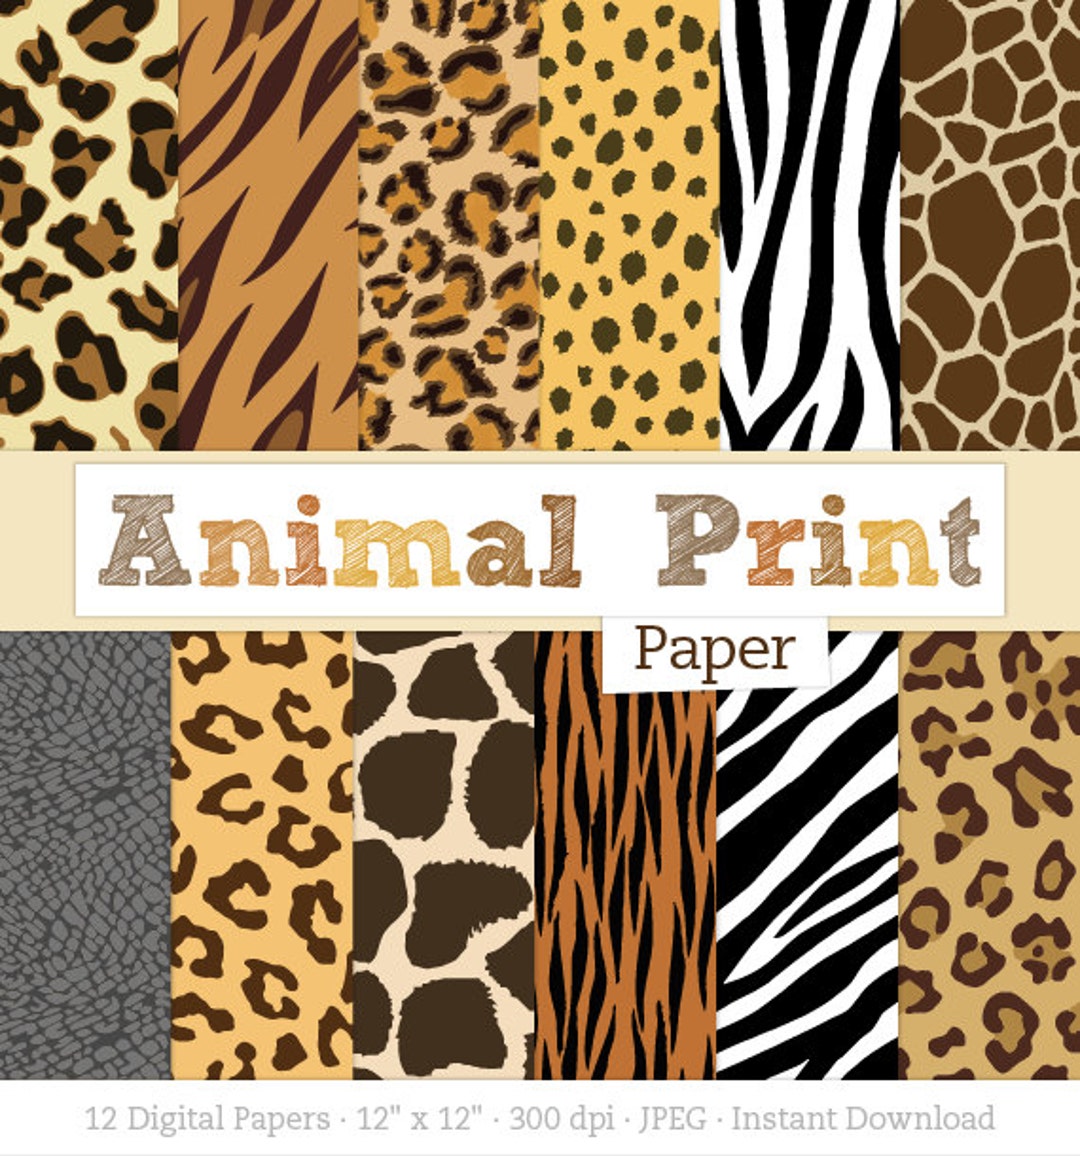 Animal Print Digital Paper Pack Zebra Print Leopard Print Tiger Stripes  Giraffe Spots Elephant Skin Textures Instant Digital Download - Etsy